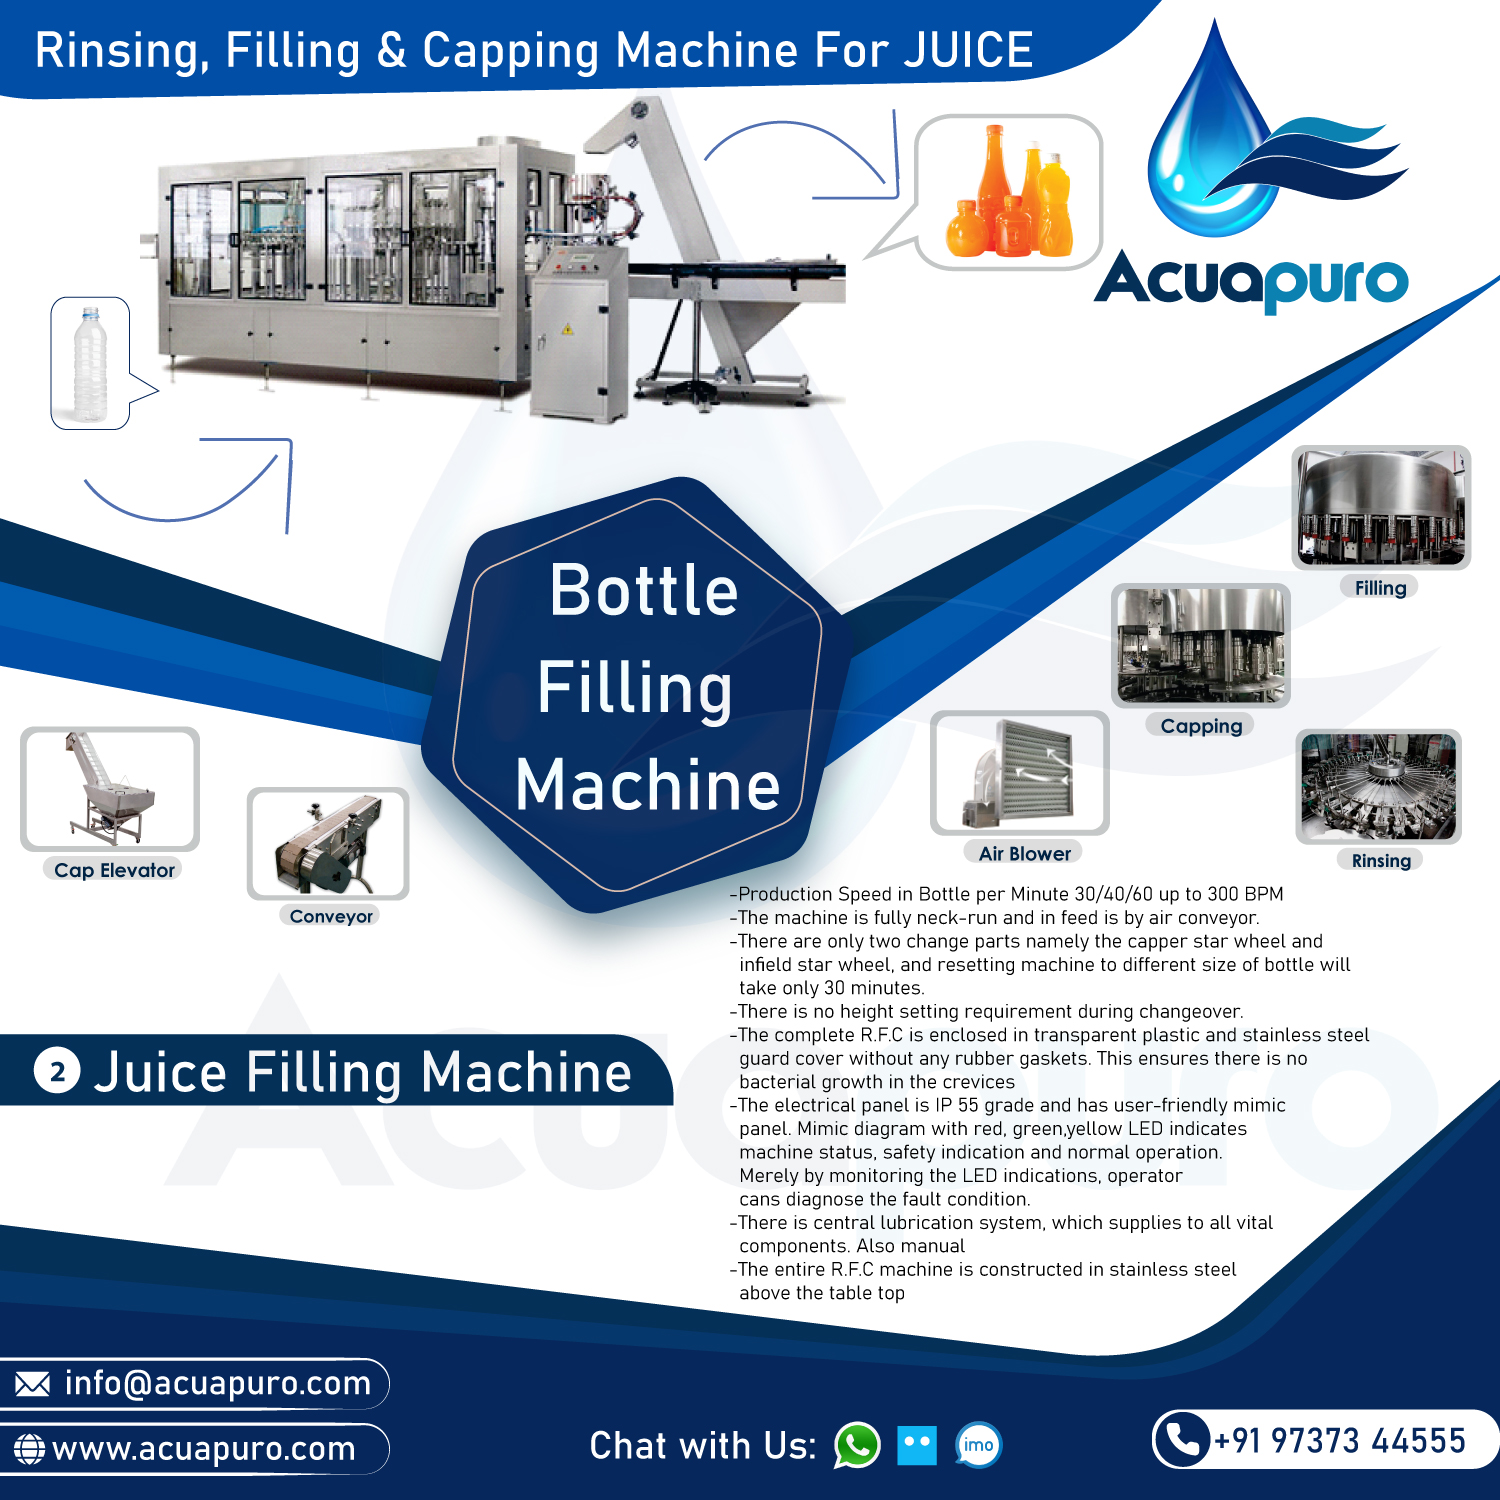 Juice Filling Machine Manufacturer in Ahmedabad, India - Acuapuro Water